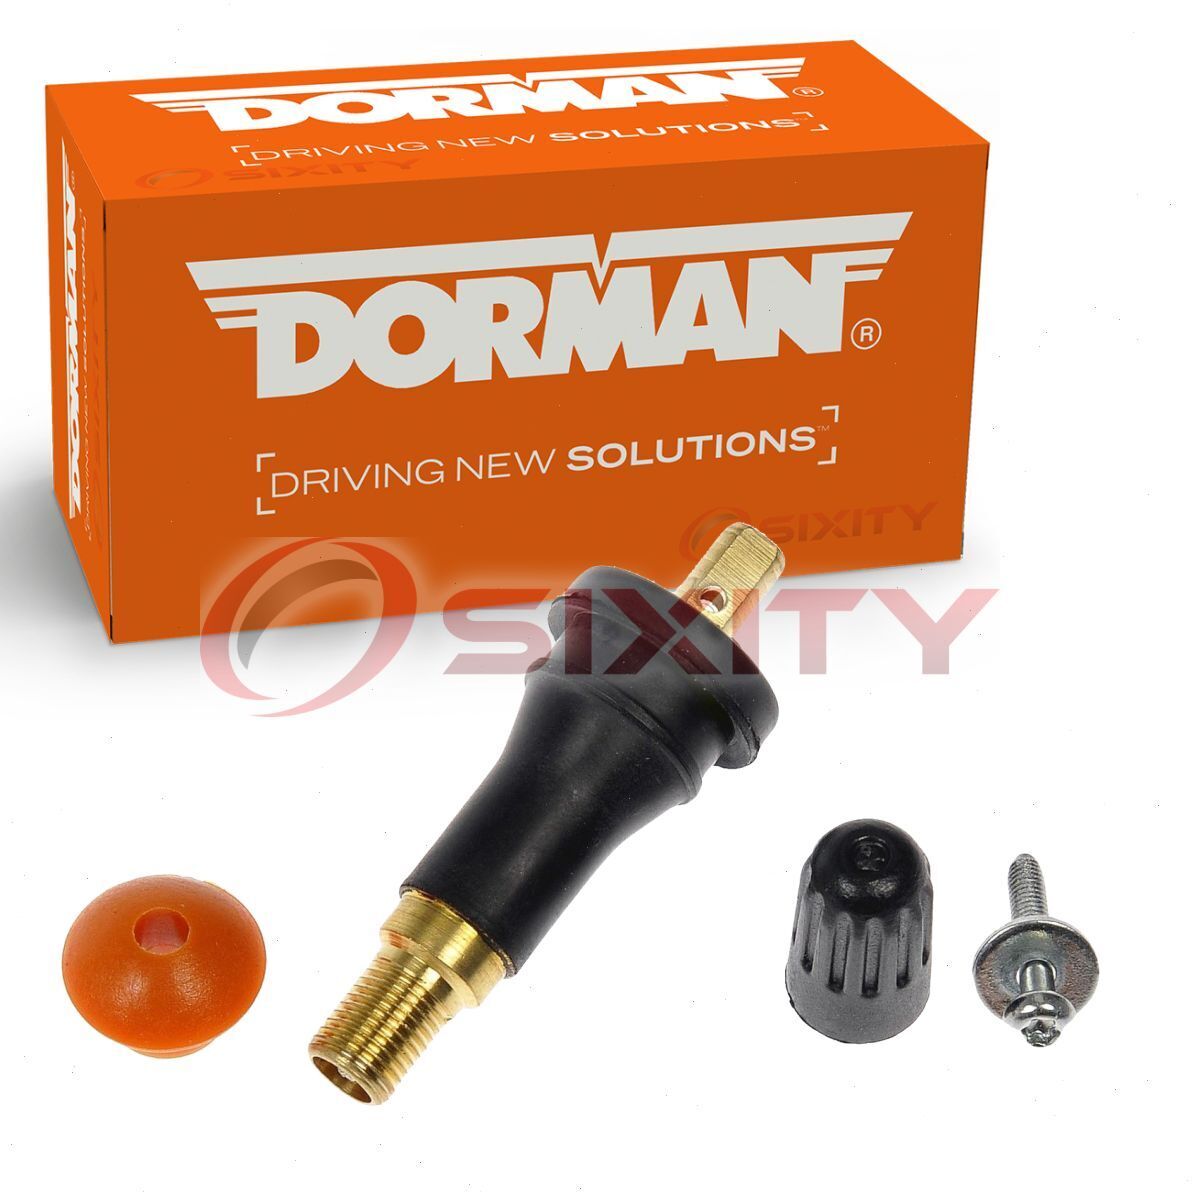 Dorman TPMS Valve Kit for 2009 Kia Borrego Tire Pressure Monitoring System  ey